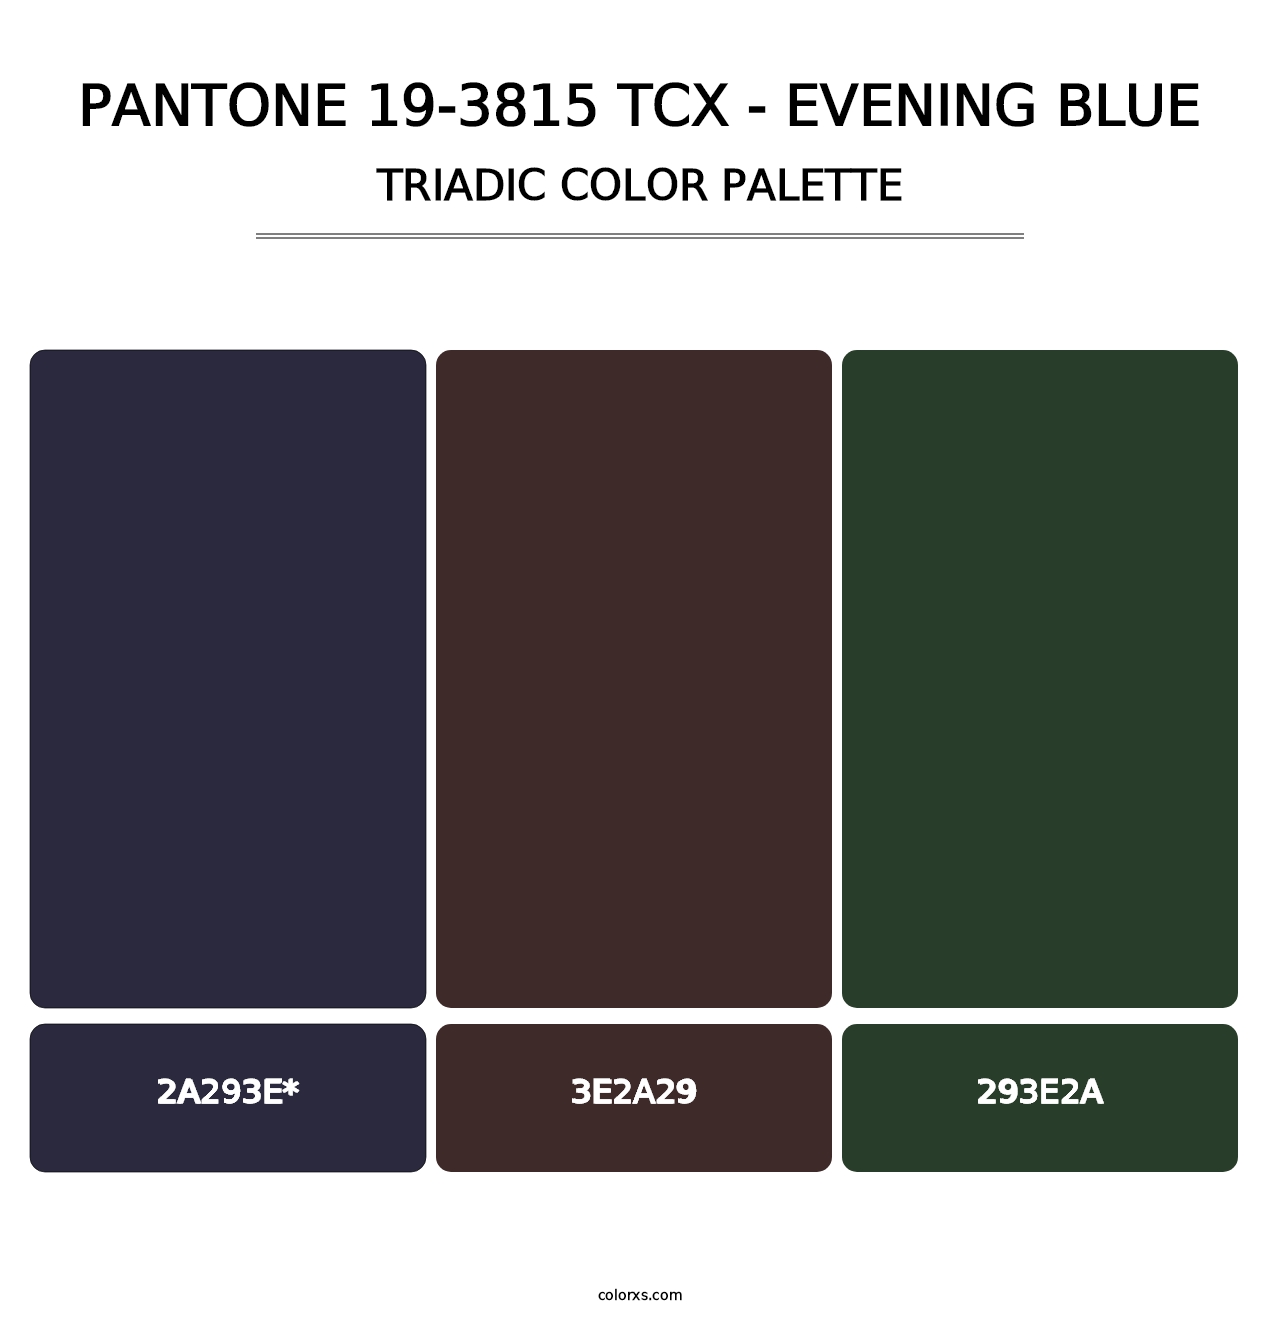 PANTONE 19-3815 TCX - Evening Blue - Triadic Color Palette